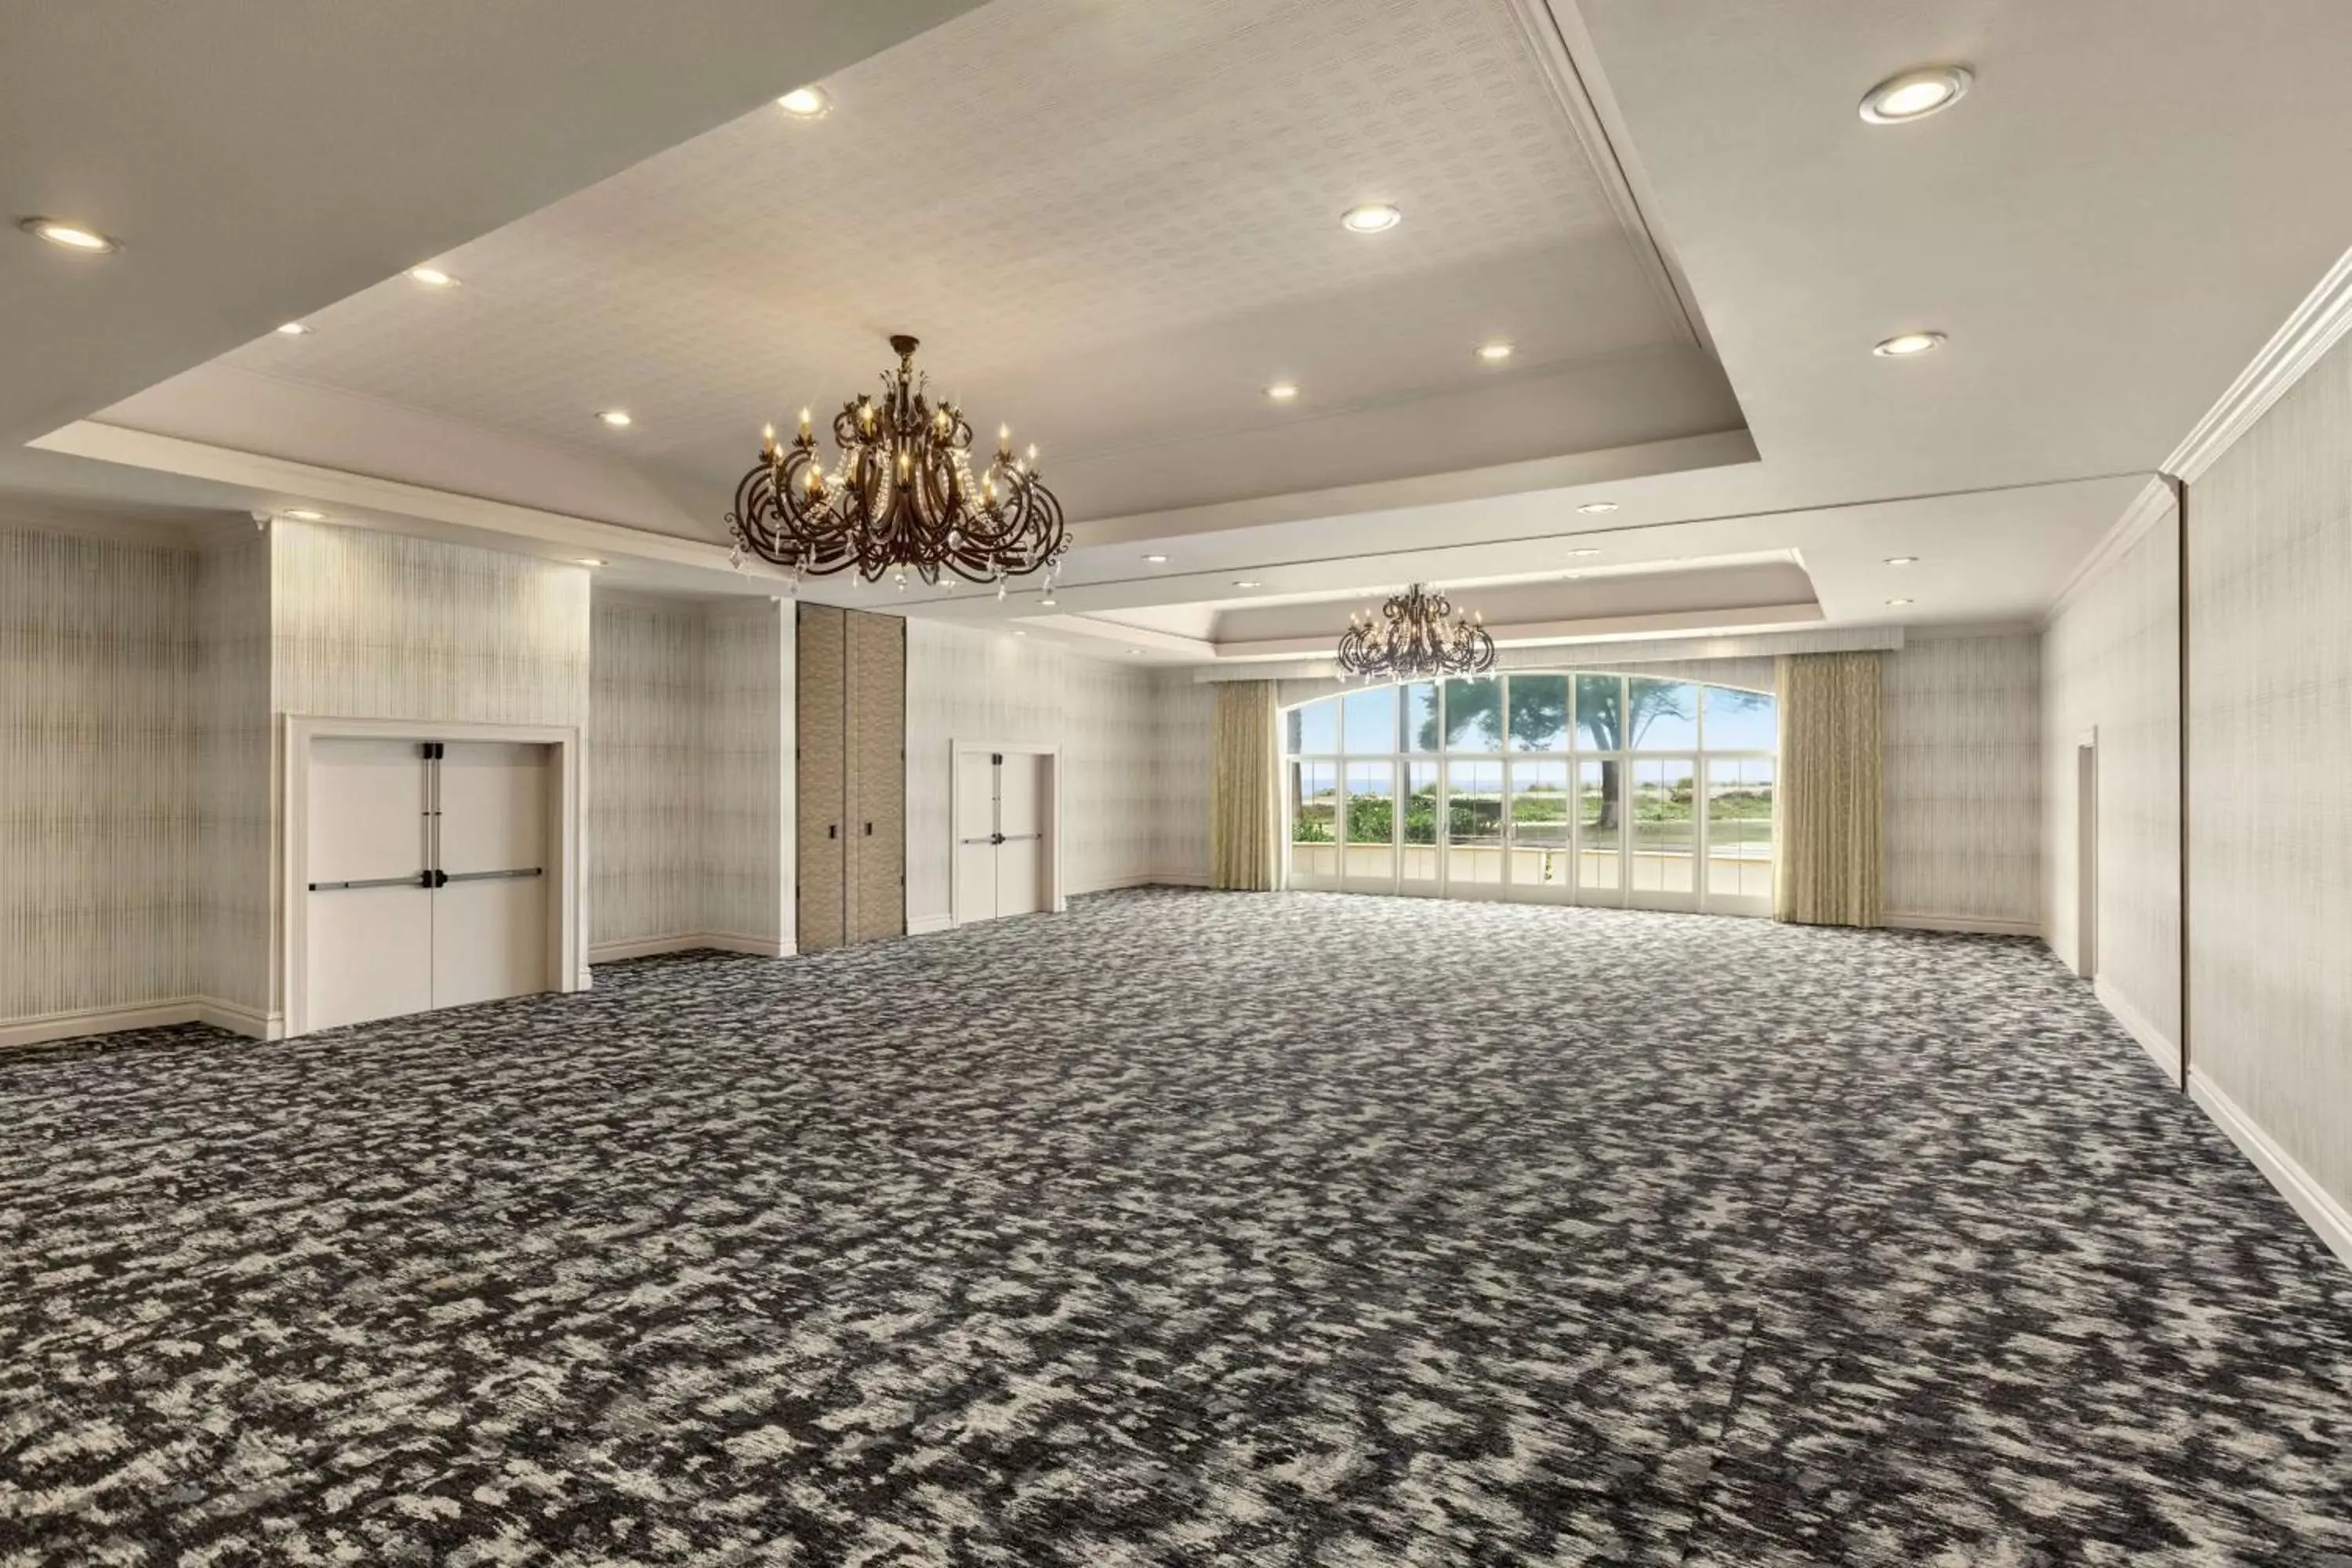 Meeting/conference room in Hilton Garden Inn Carlsbad Beach